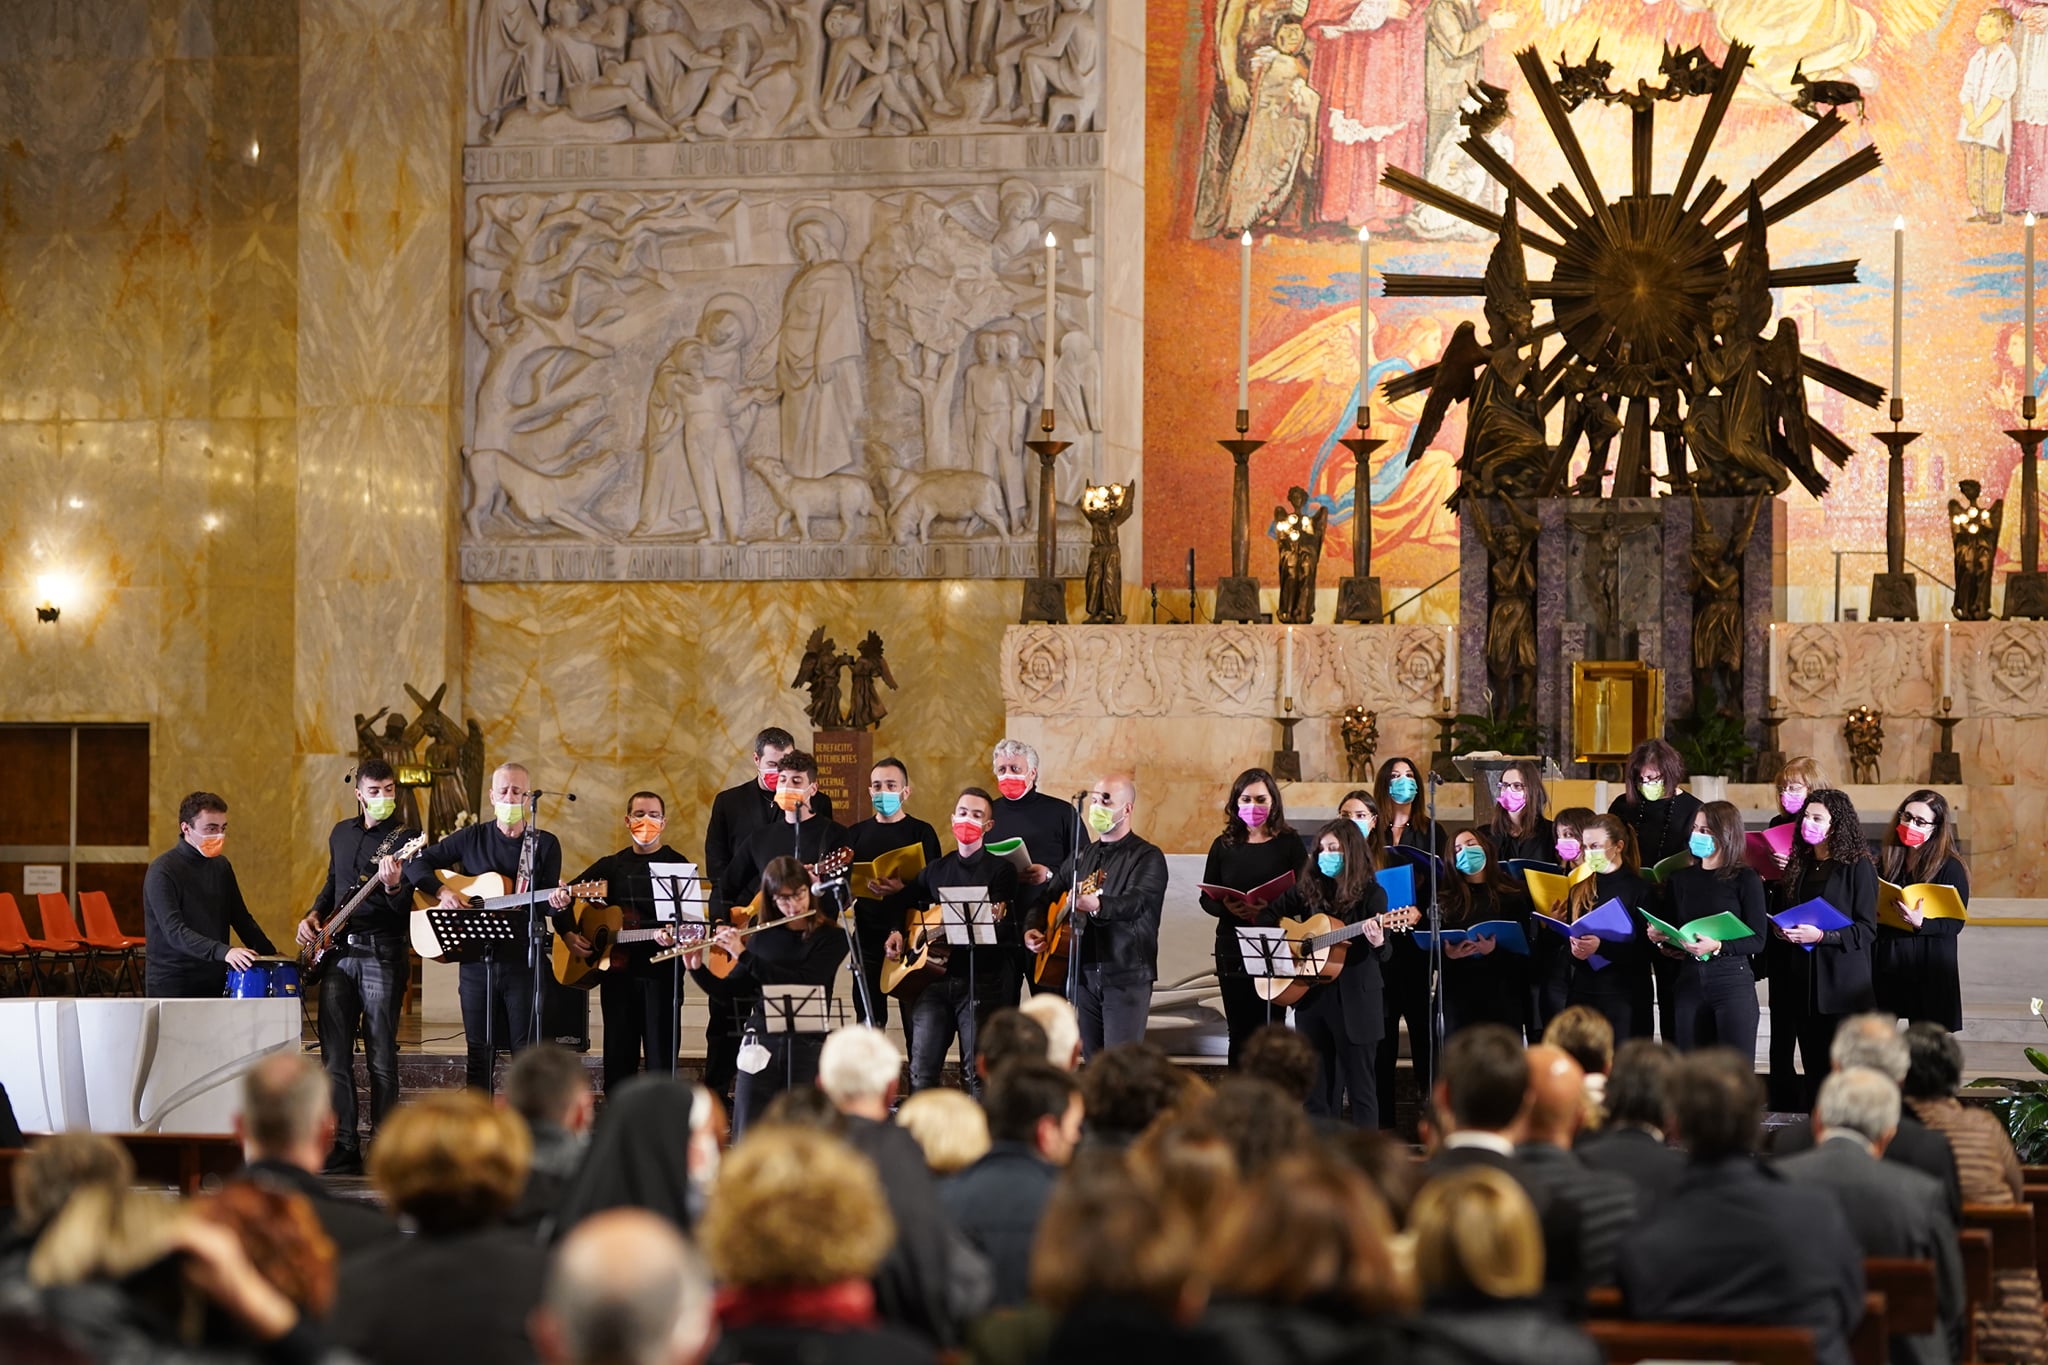 canti liturgici, cantate inni con arte, san francesco di sales